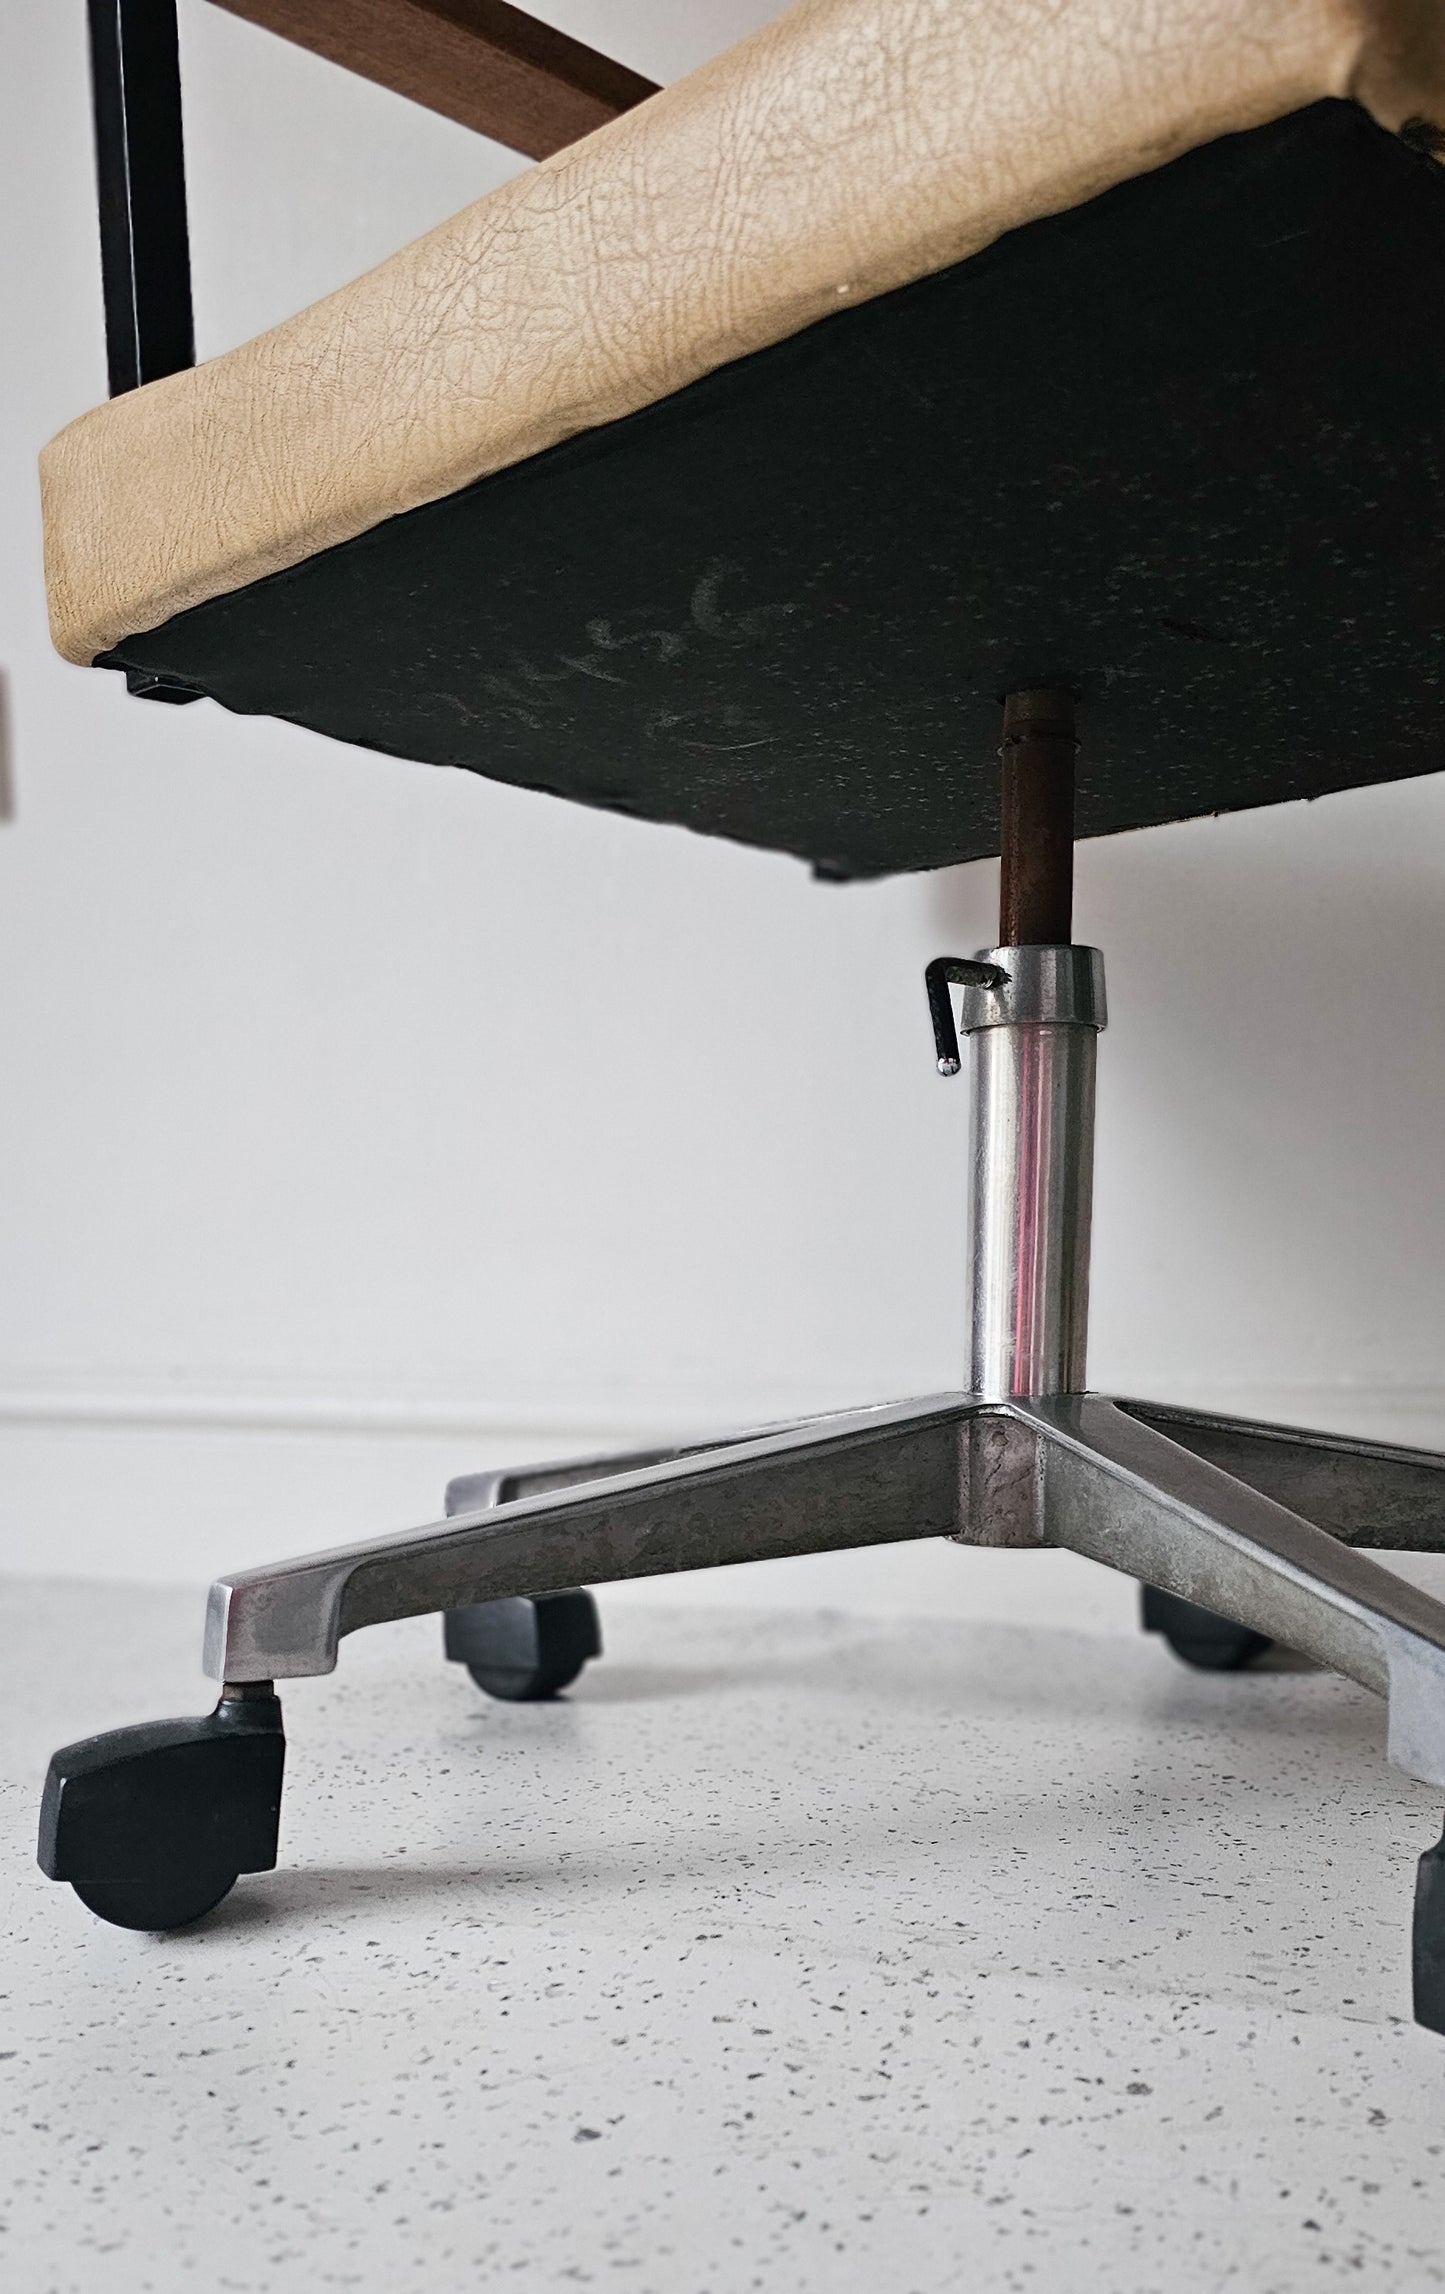 The Newton Retro Chrome Swivel Desk Chair